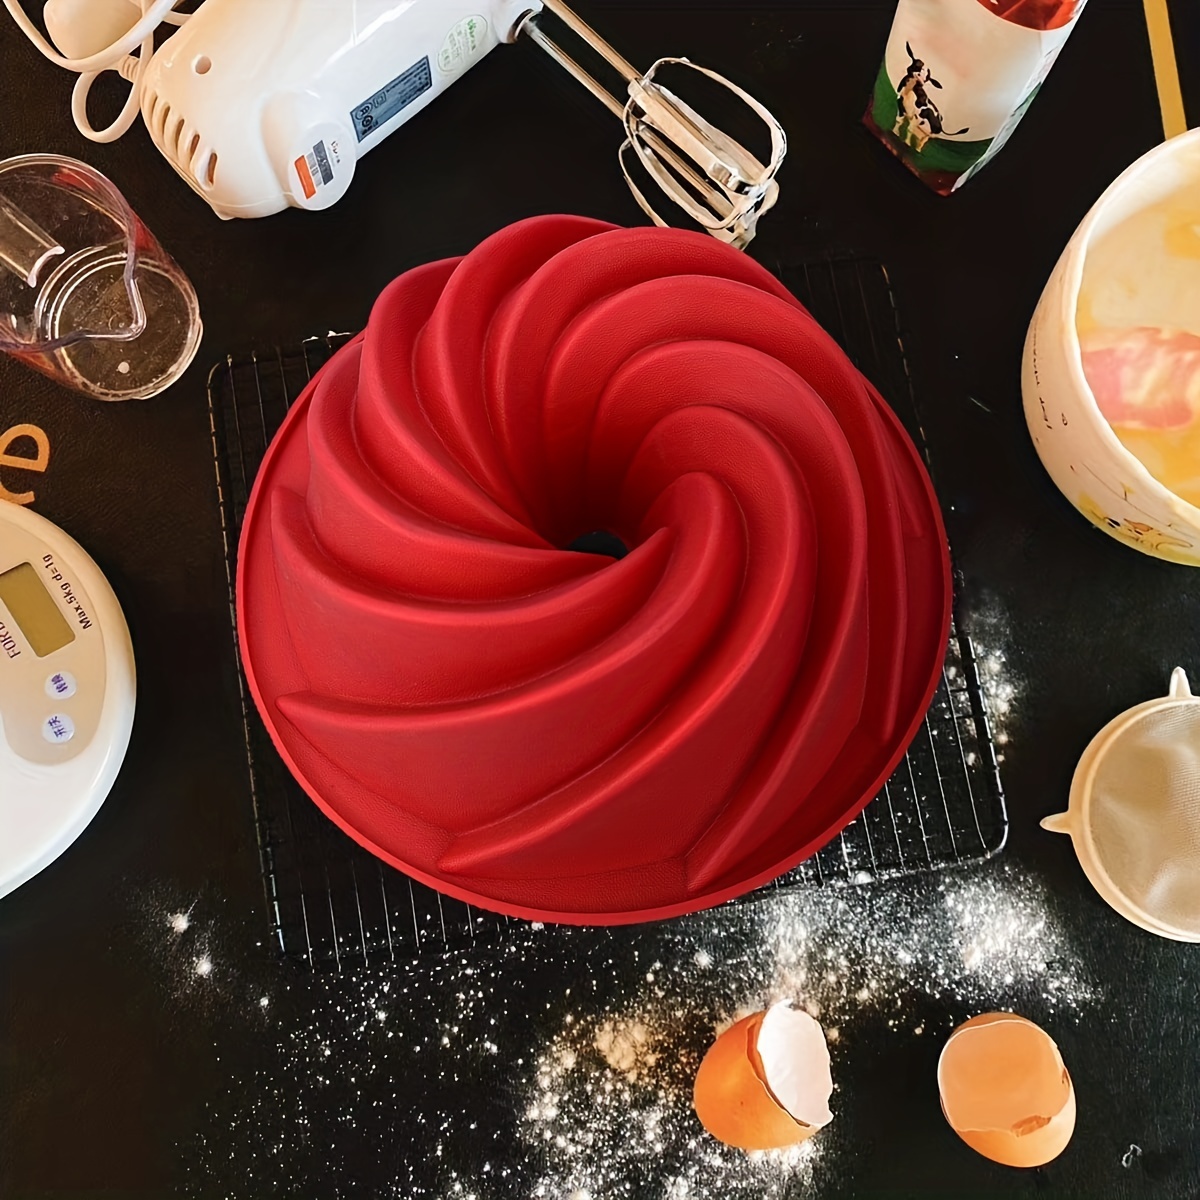 Silicone Cake Pan with Spiral Design, Food Grade Non-Stick